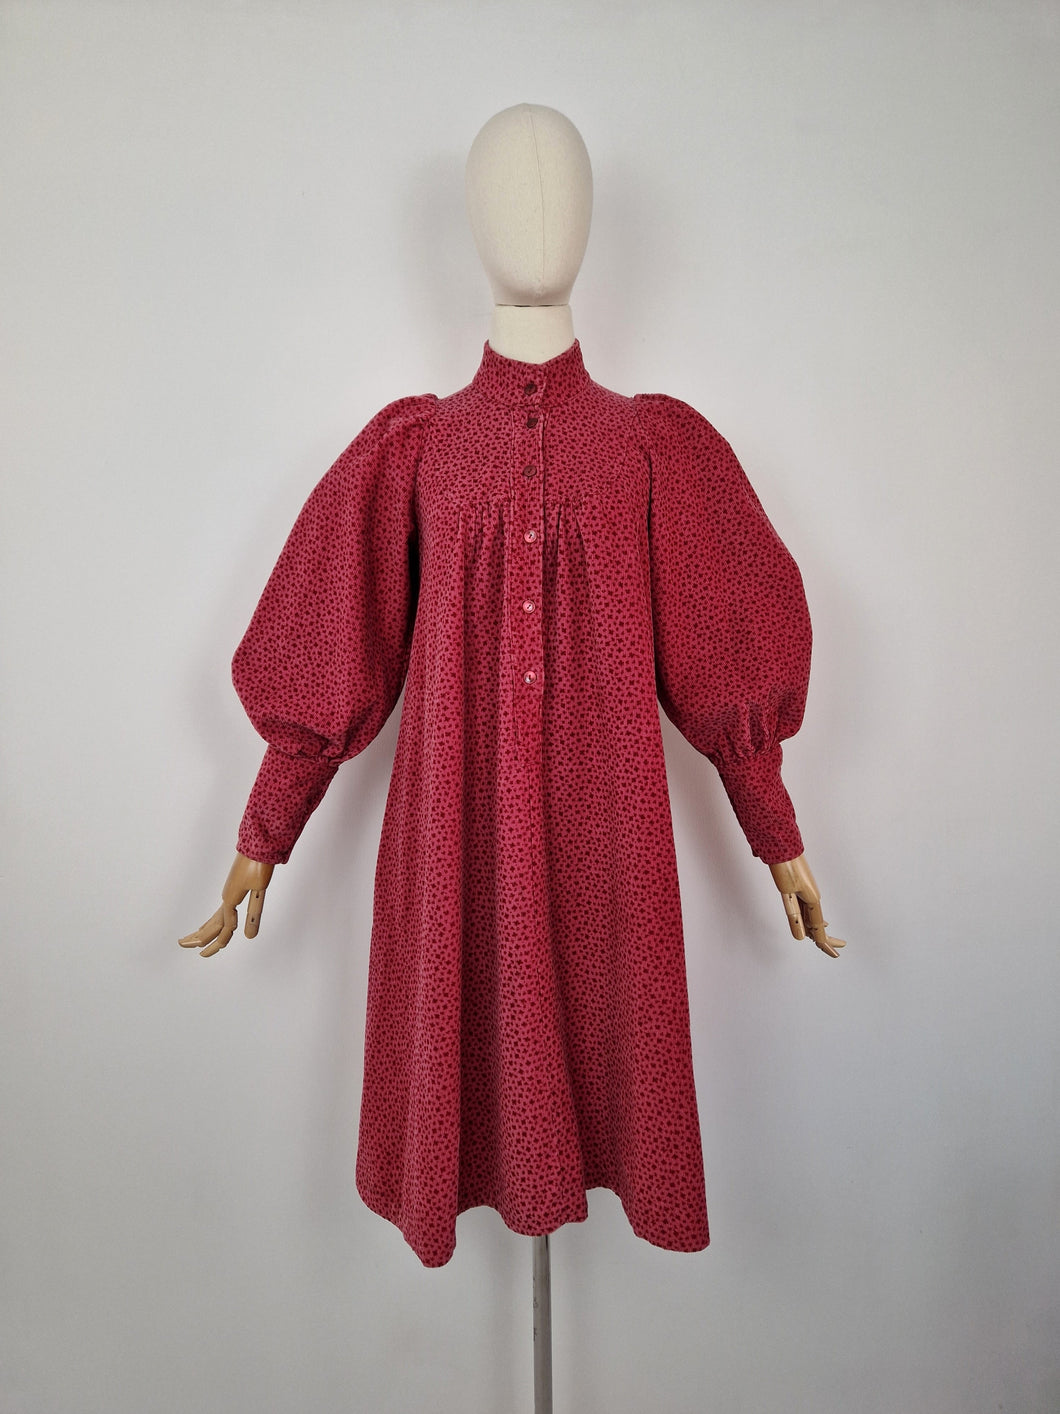 Vintage 70s Laura Ashley red corduroy dress